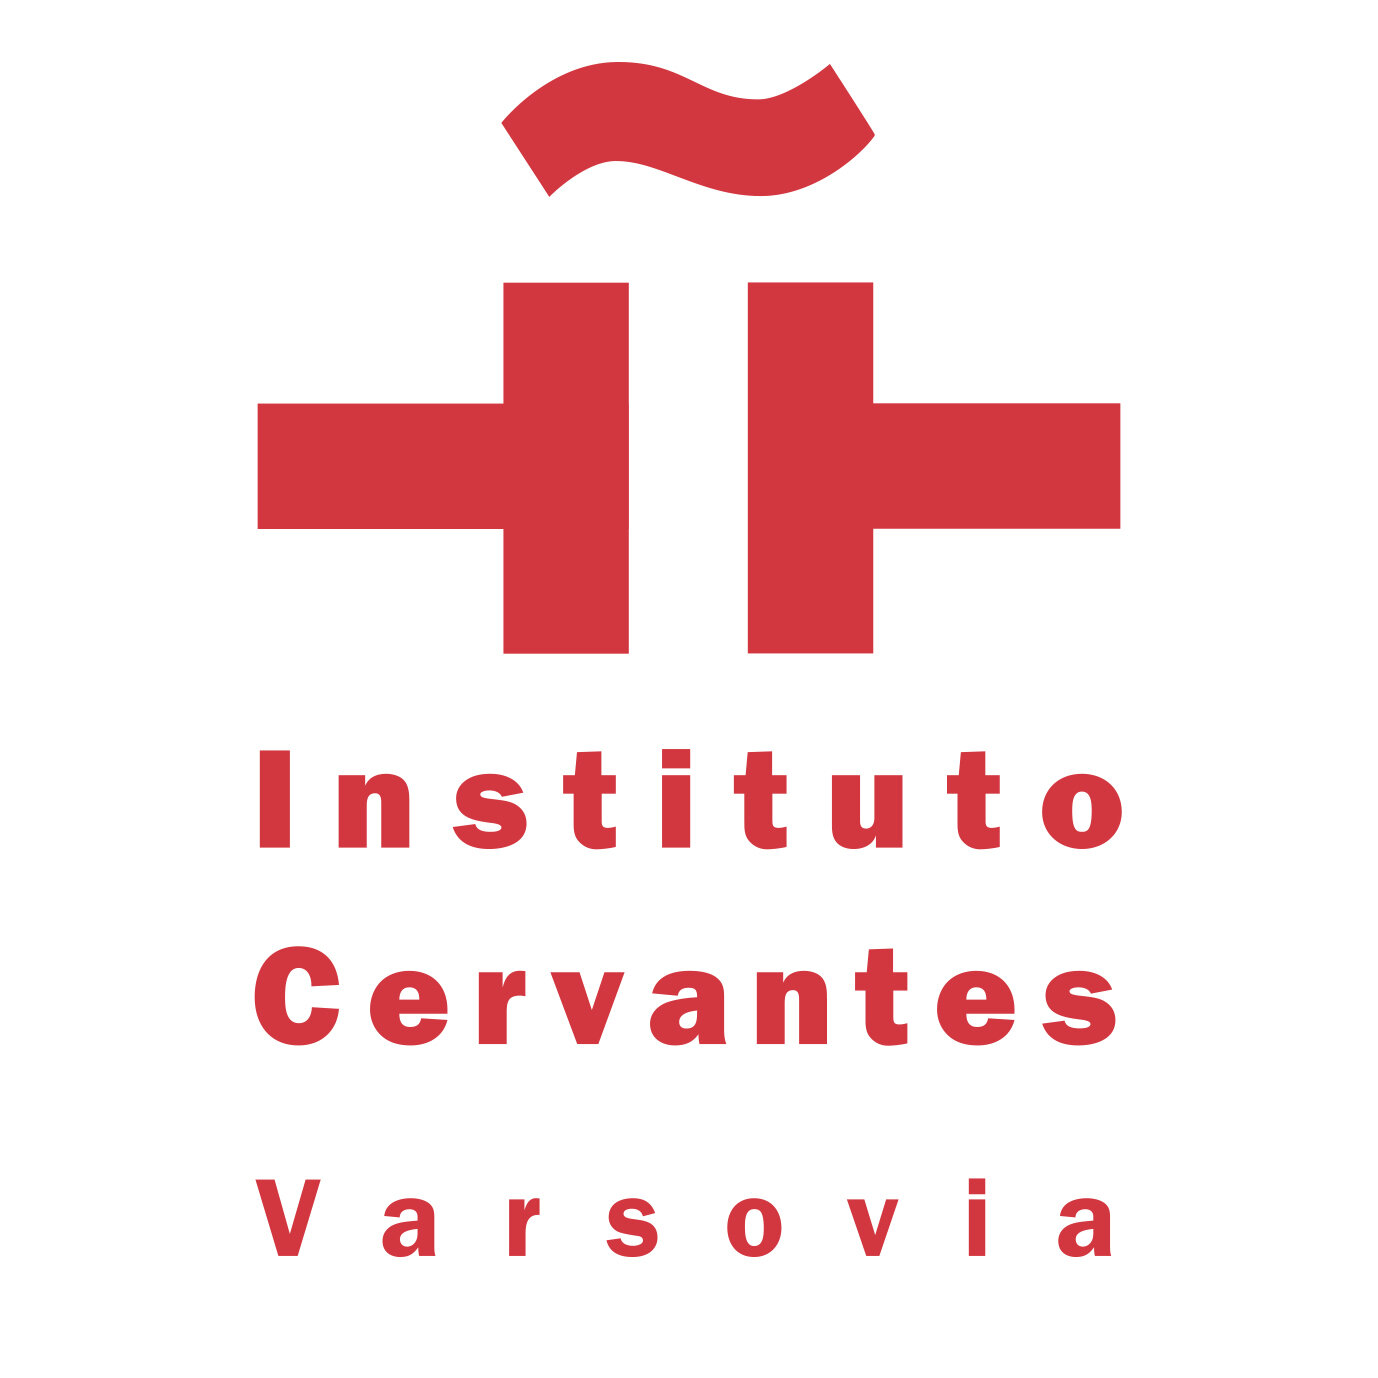 Instituto_Cervantes_Varsovia.jpg